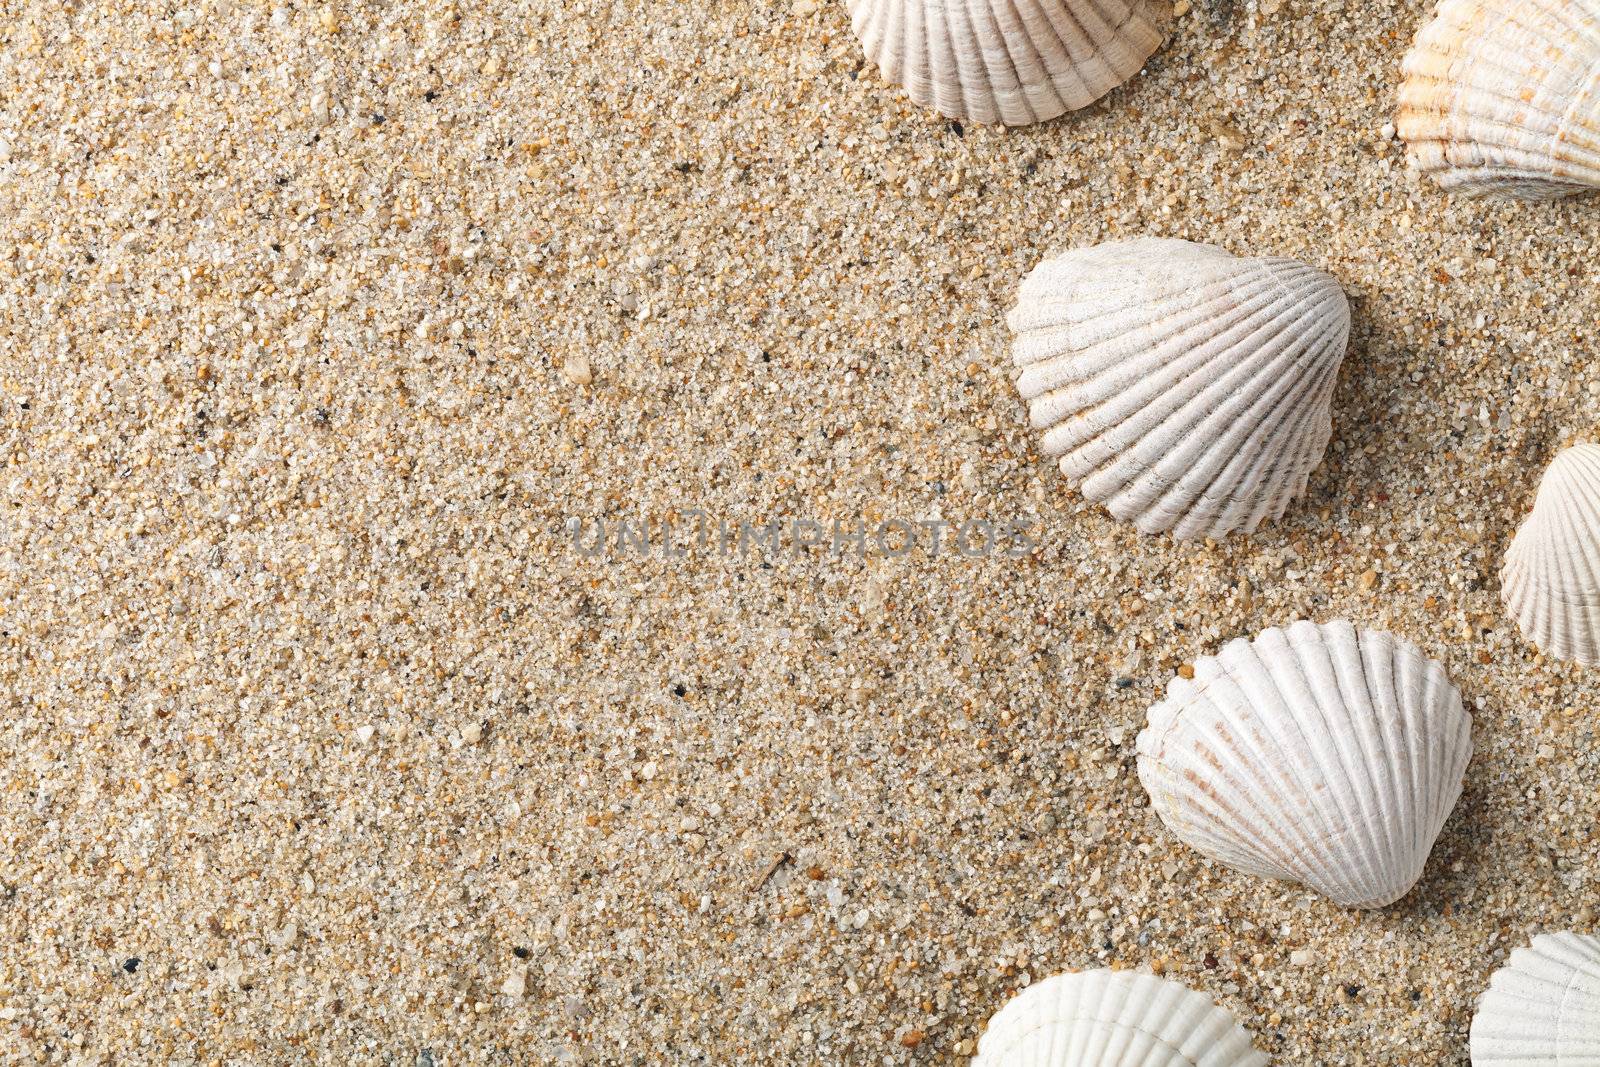 Seashells on the sand by bozena_fulawka